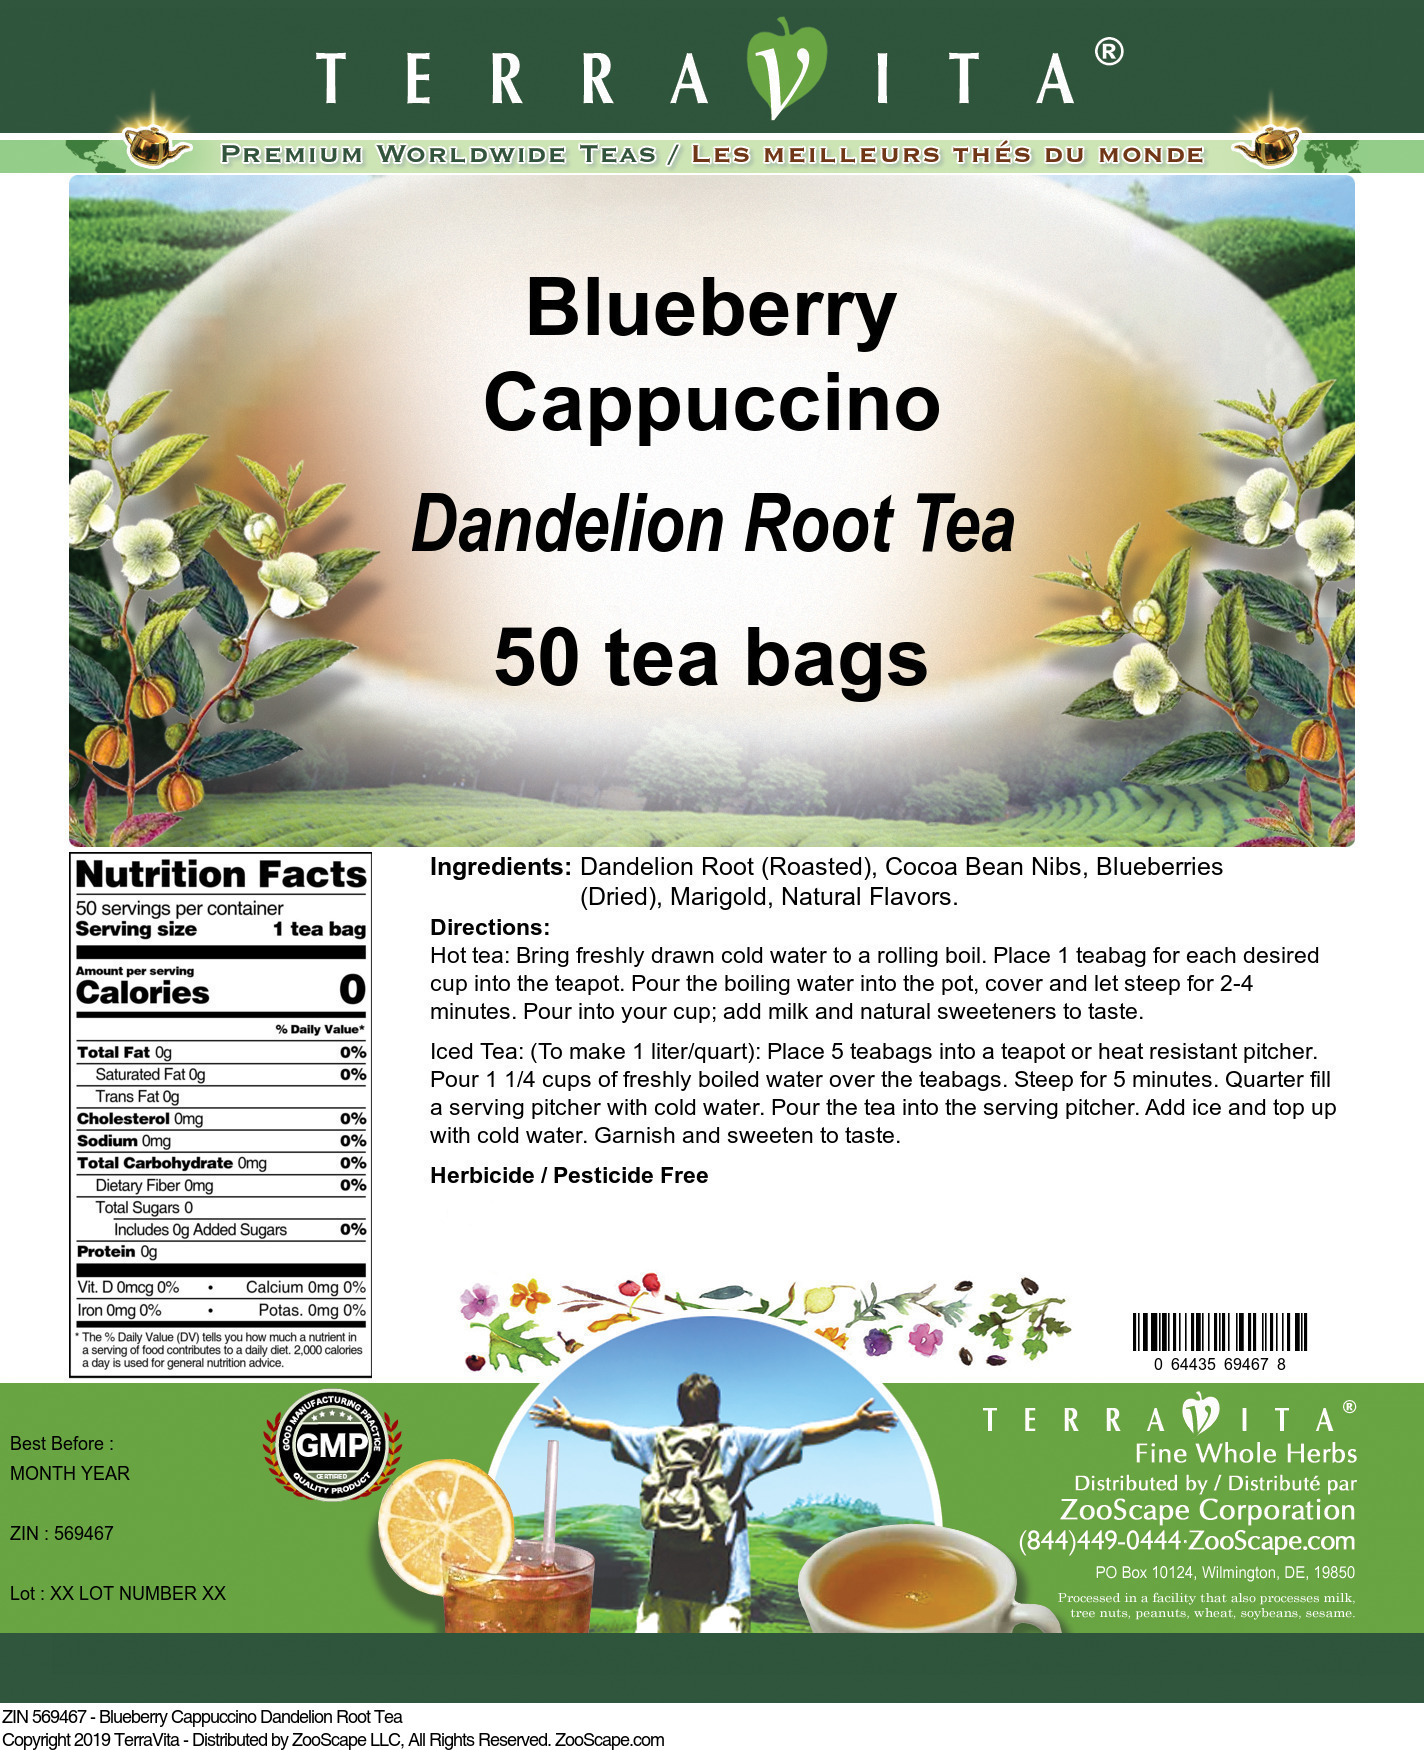 Blueberry Cappuccino Dandelion Root Tea - Label